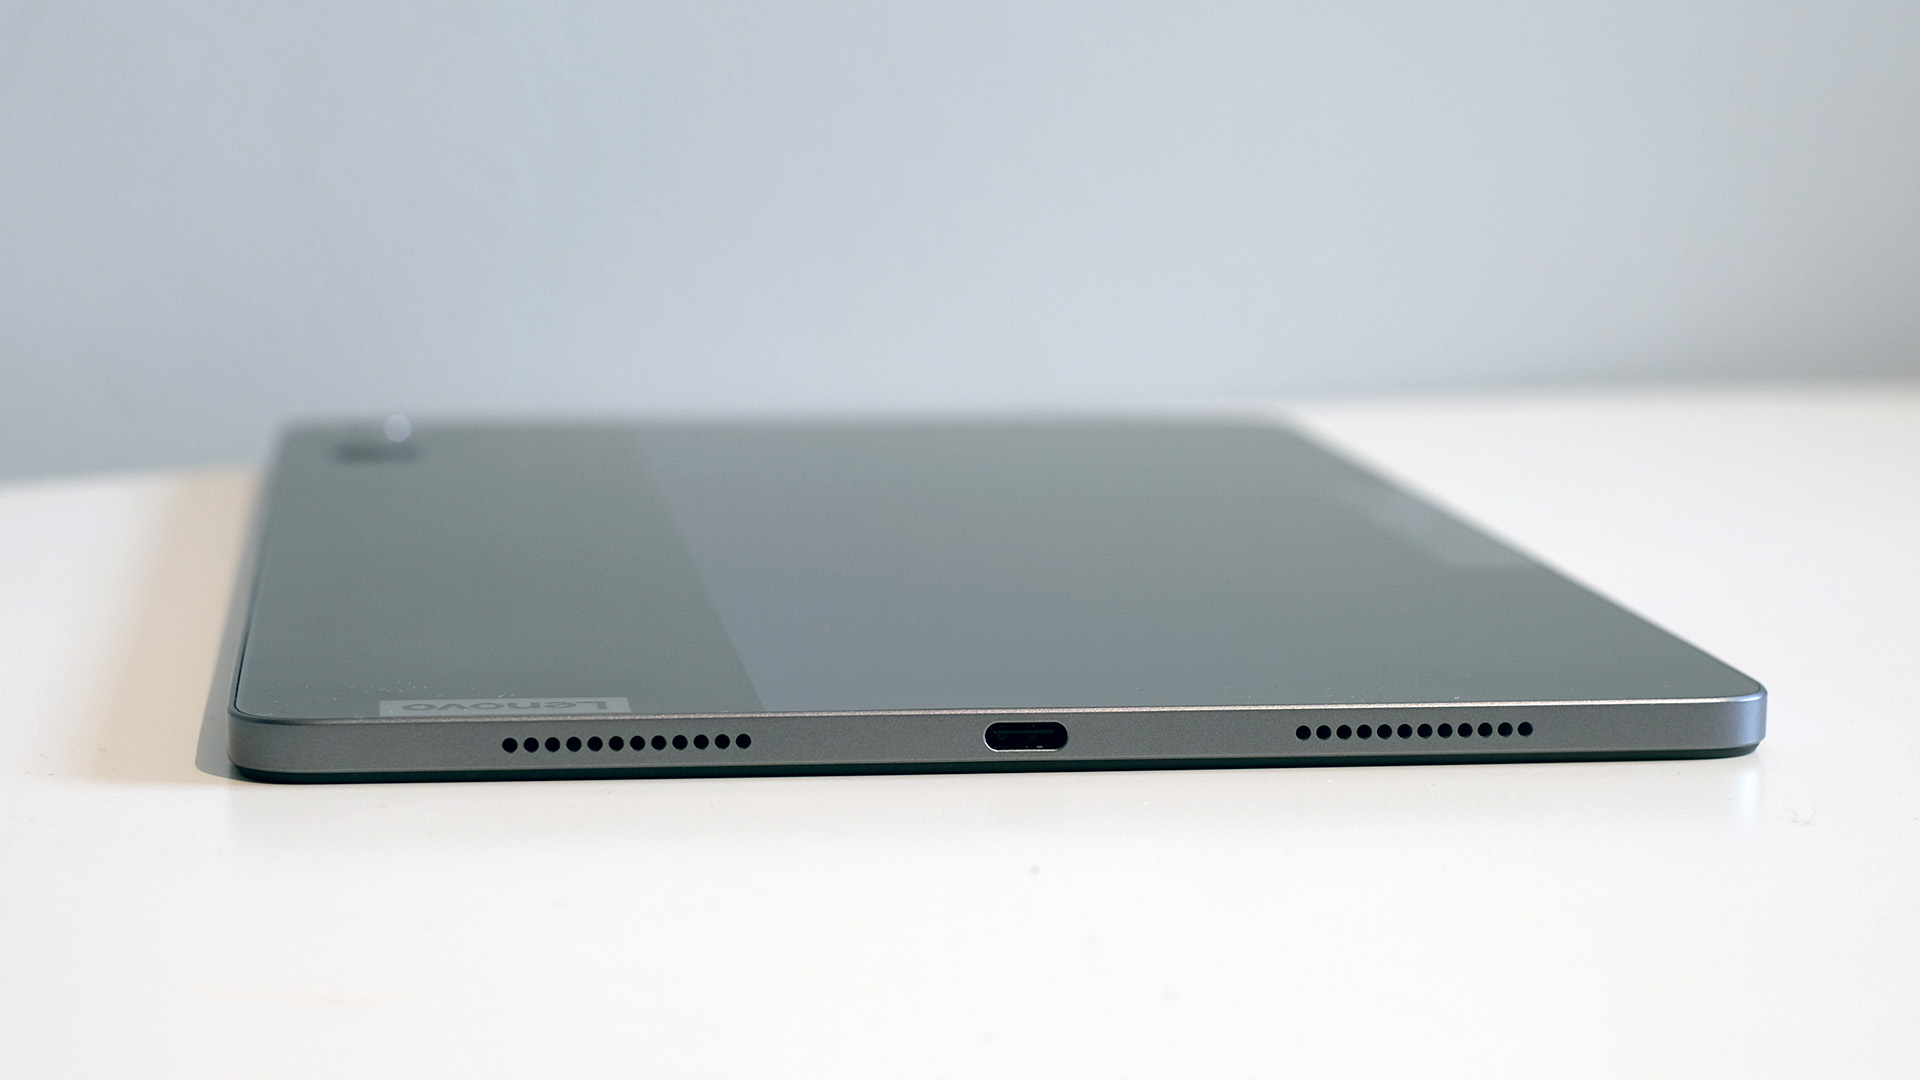 Lenovo Tab P11 Pro タブレット (11.2インチ OLED Kompanio 1300T 6GB 128GB Wi-Fiモ